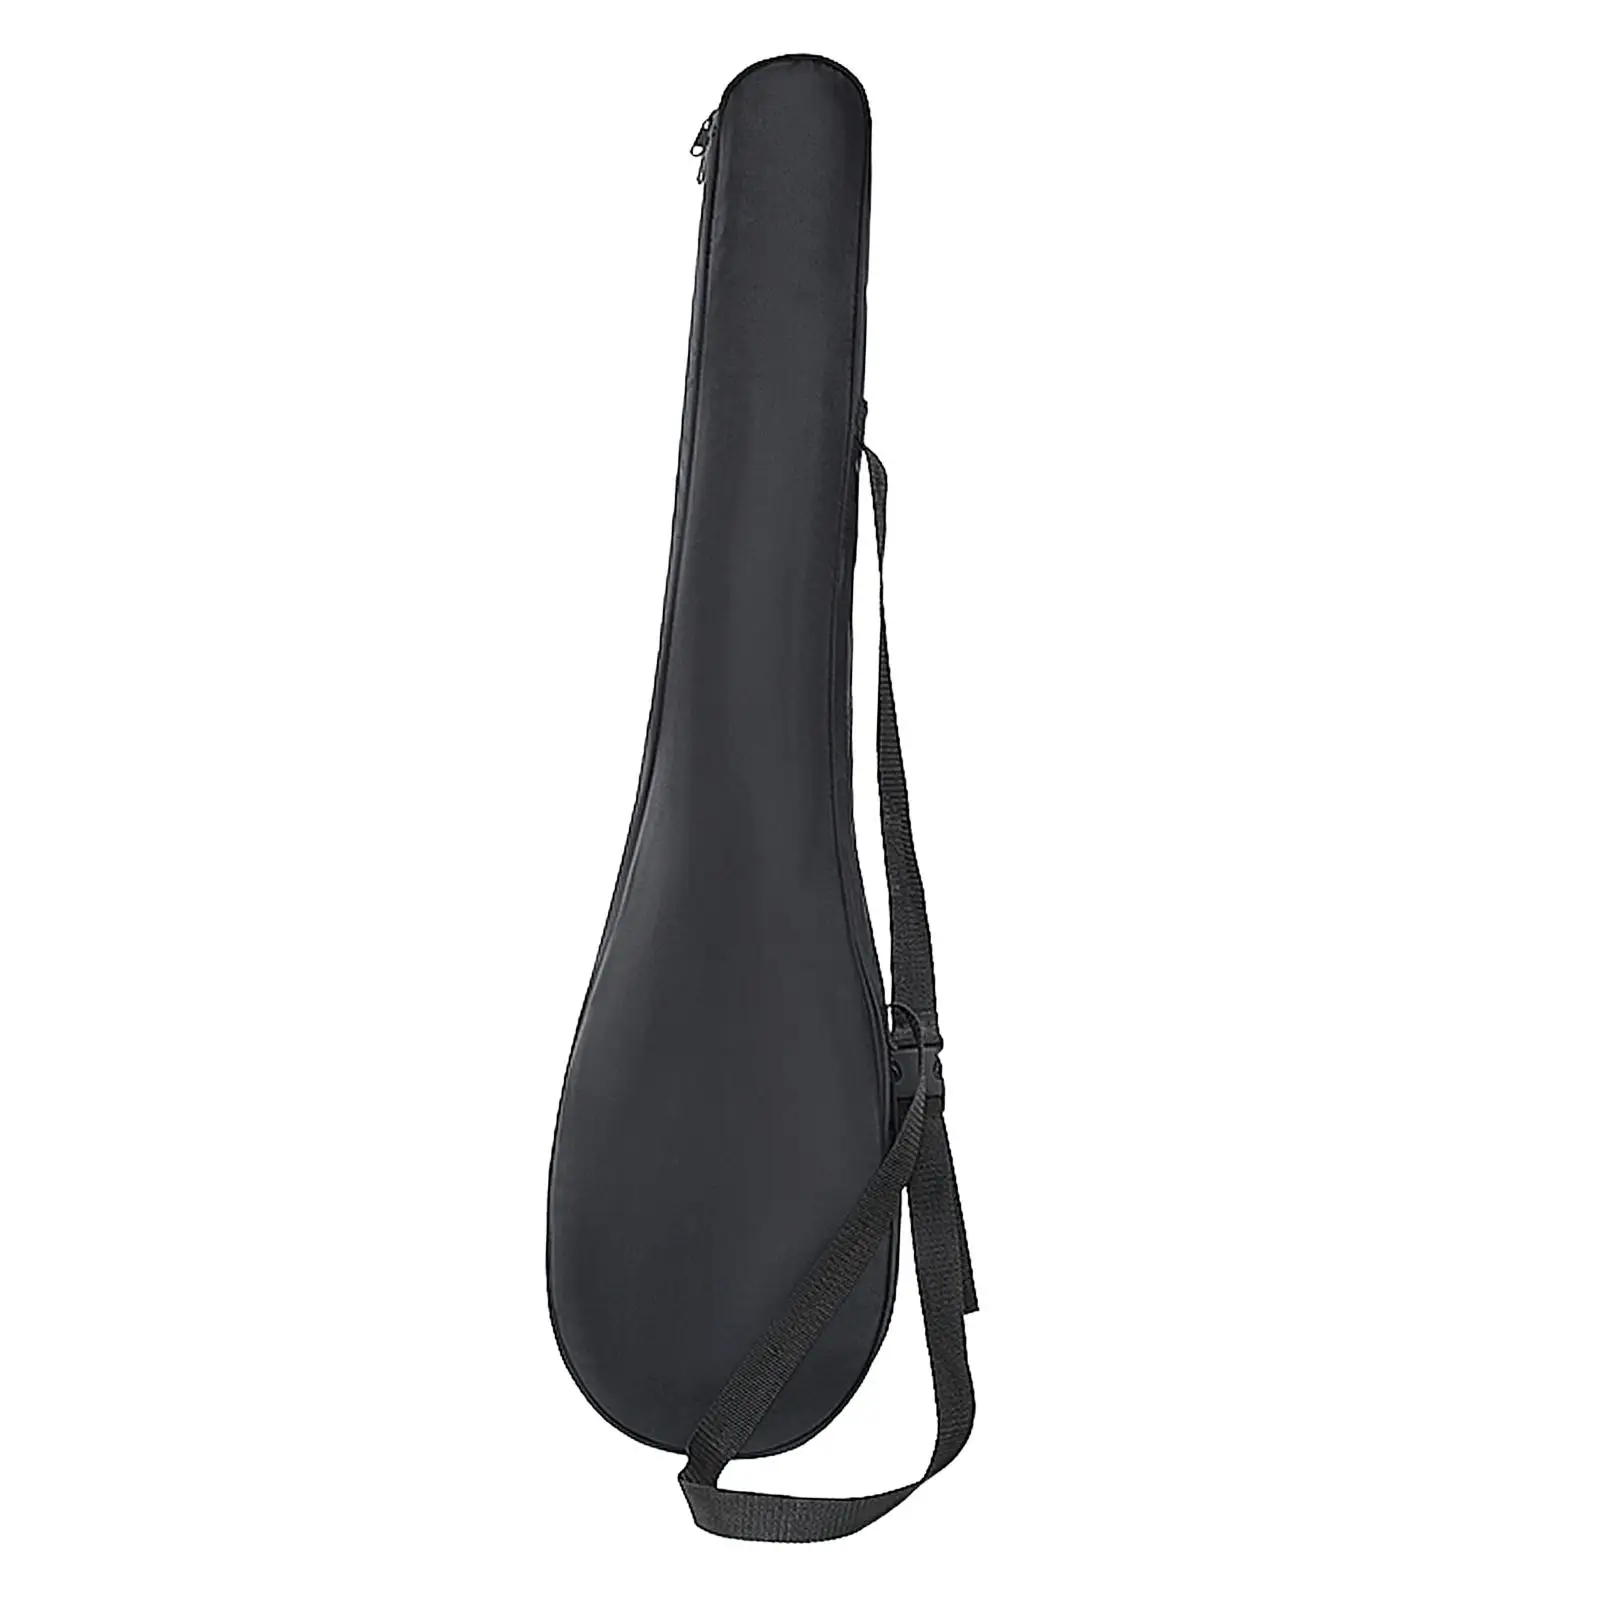 Kayak Paddle Bag Portable with Handle Adjustable Shoulder Strap Durable Kayak Accessories Paddle Storage Bag Paddle Carrying Bag